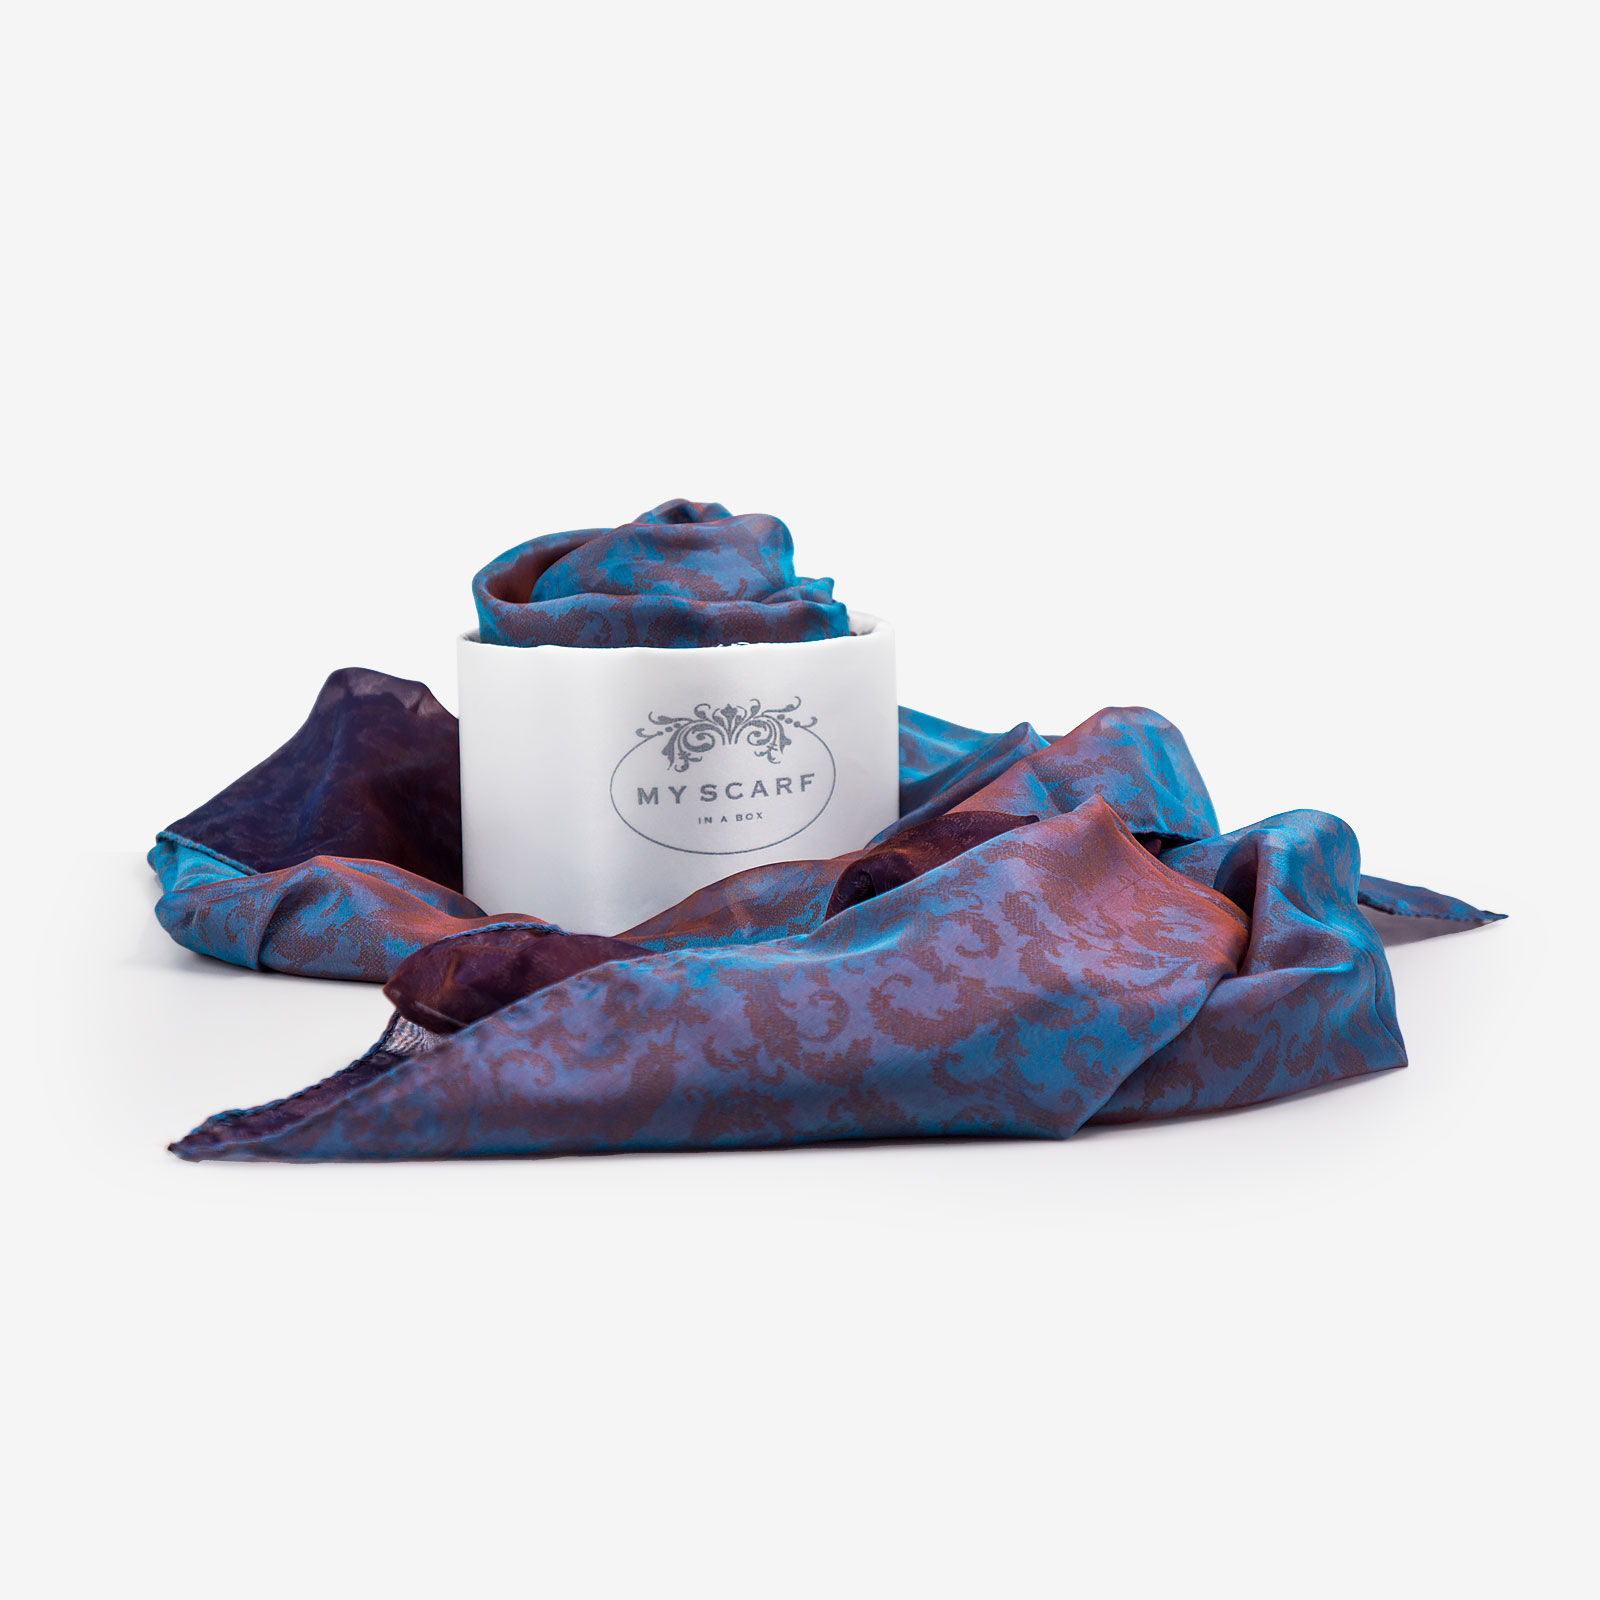 made in italy scarf silk multicolor murano my scarf in a box